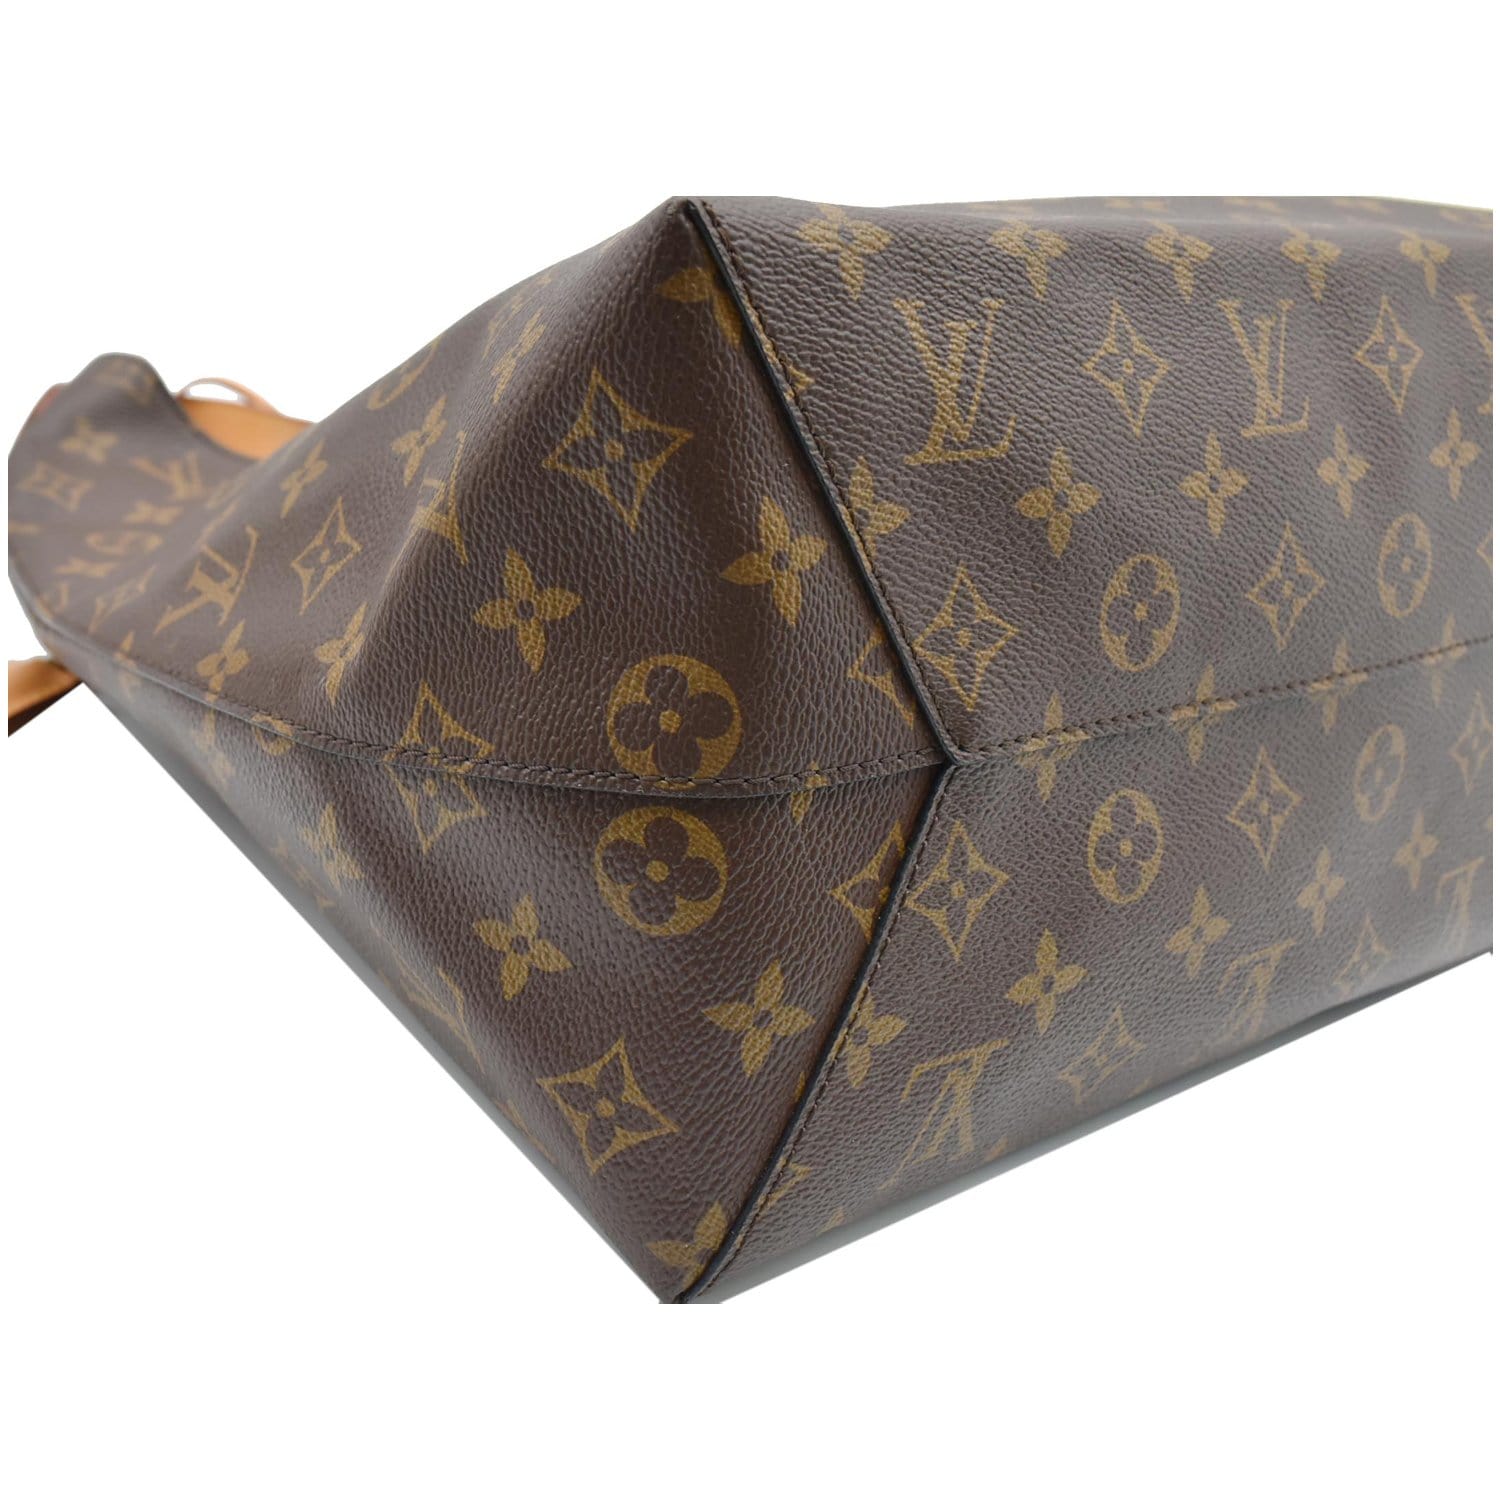 Buy Cheap Louis Vuitton Shoulder Bags Monogram Hobo Bag #9999926710 from